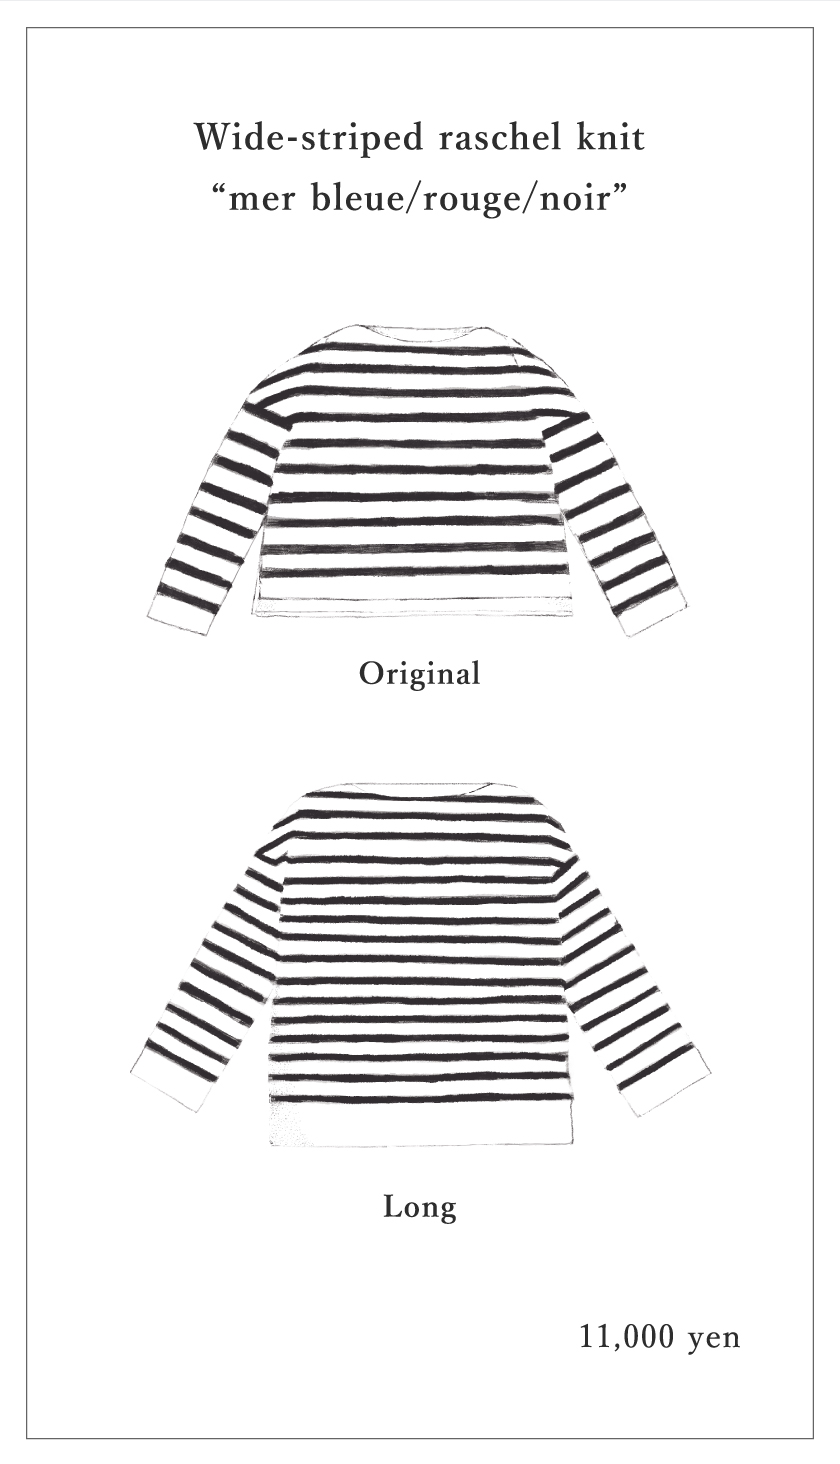 Wide-striped raschel knit “mer bleue/rouge/noir” 11,000 yen